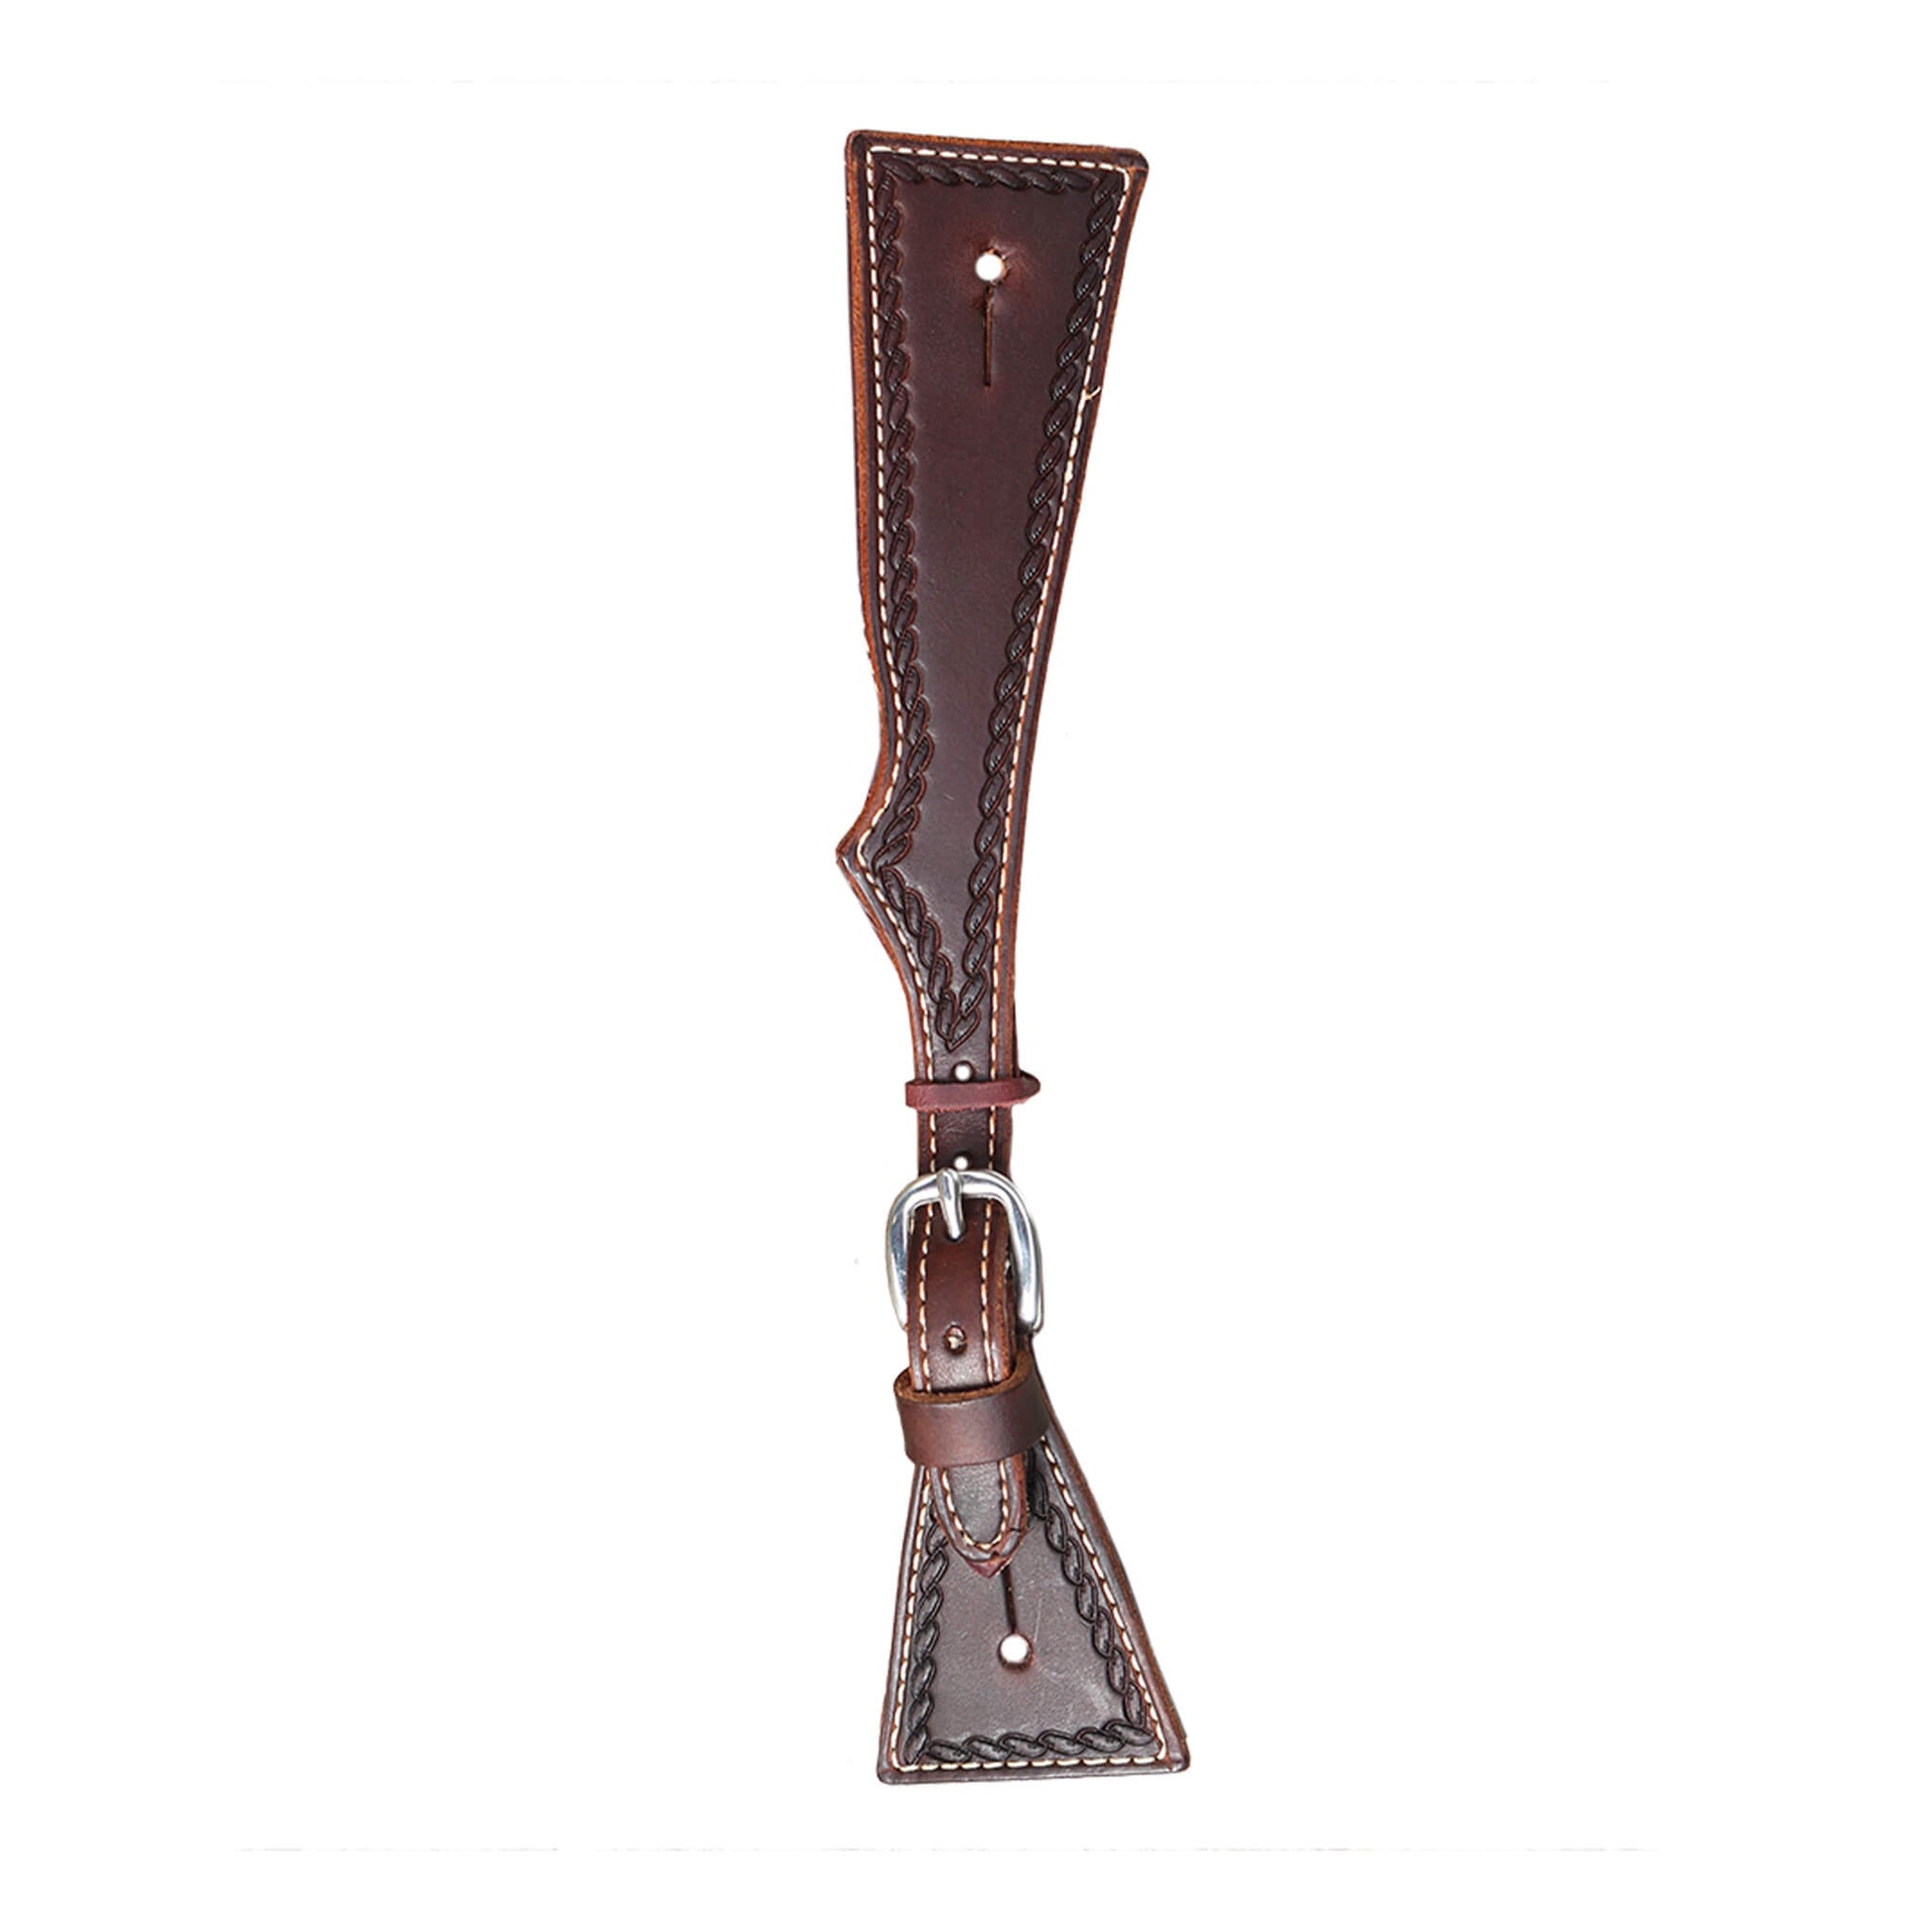 Elite men's square spur straps chocolate leather rope tooled.